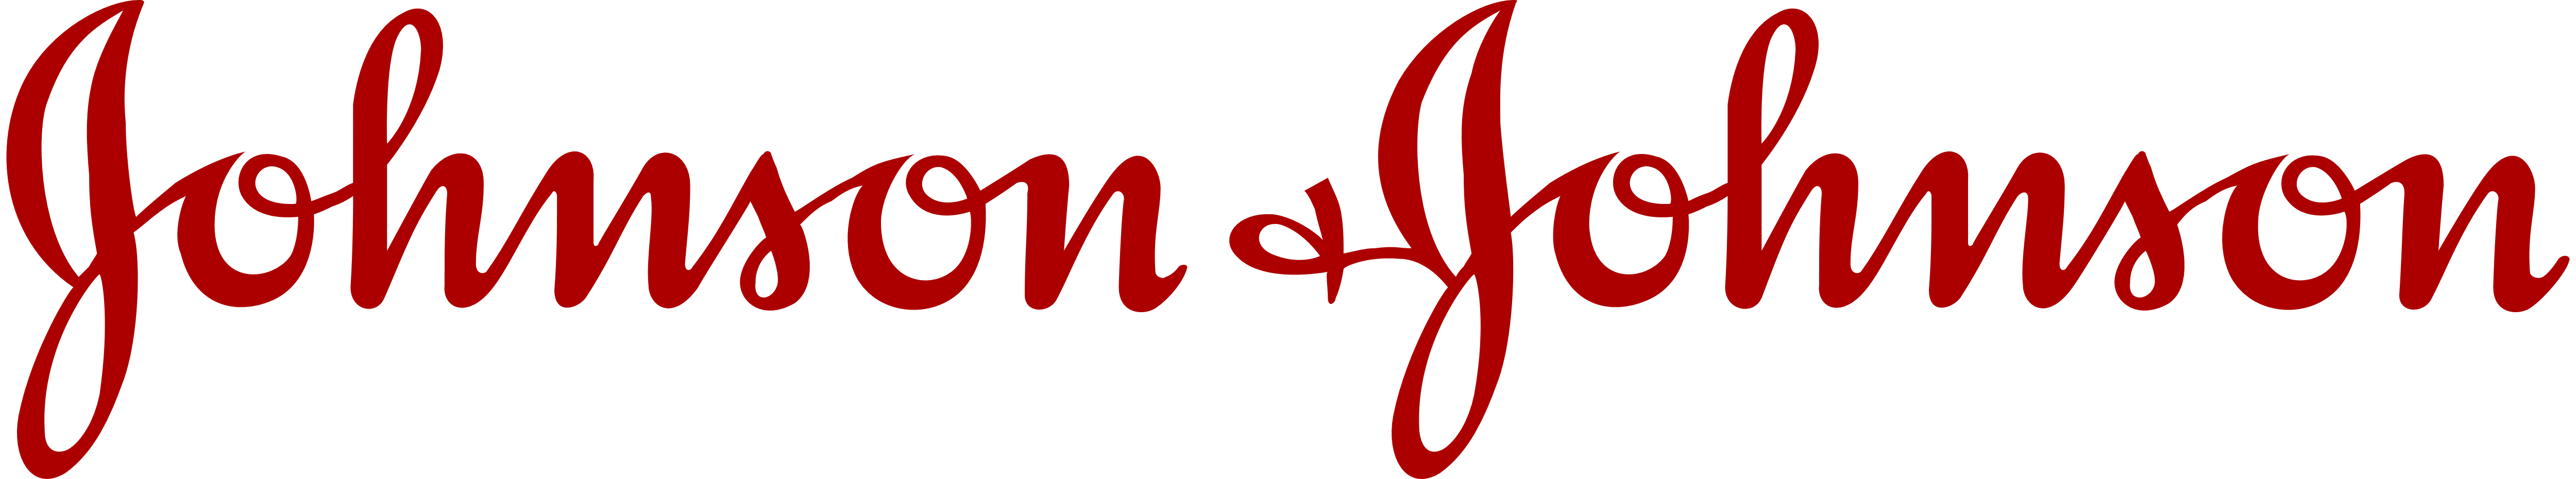 johnson_logo